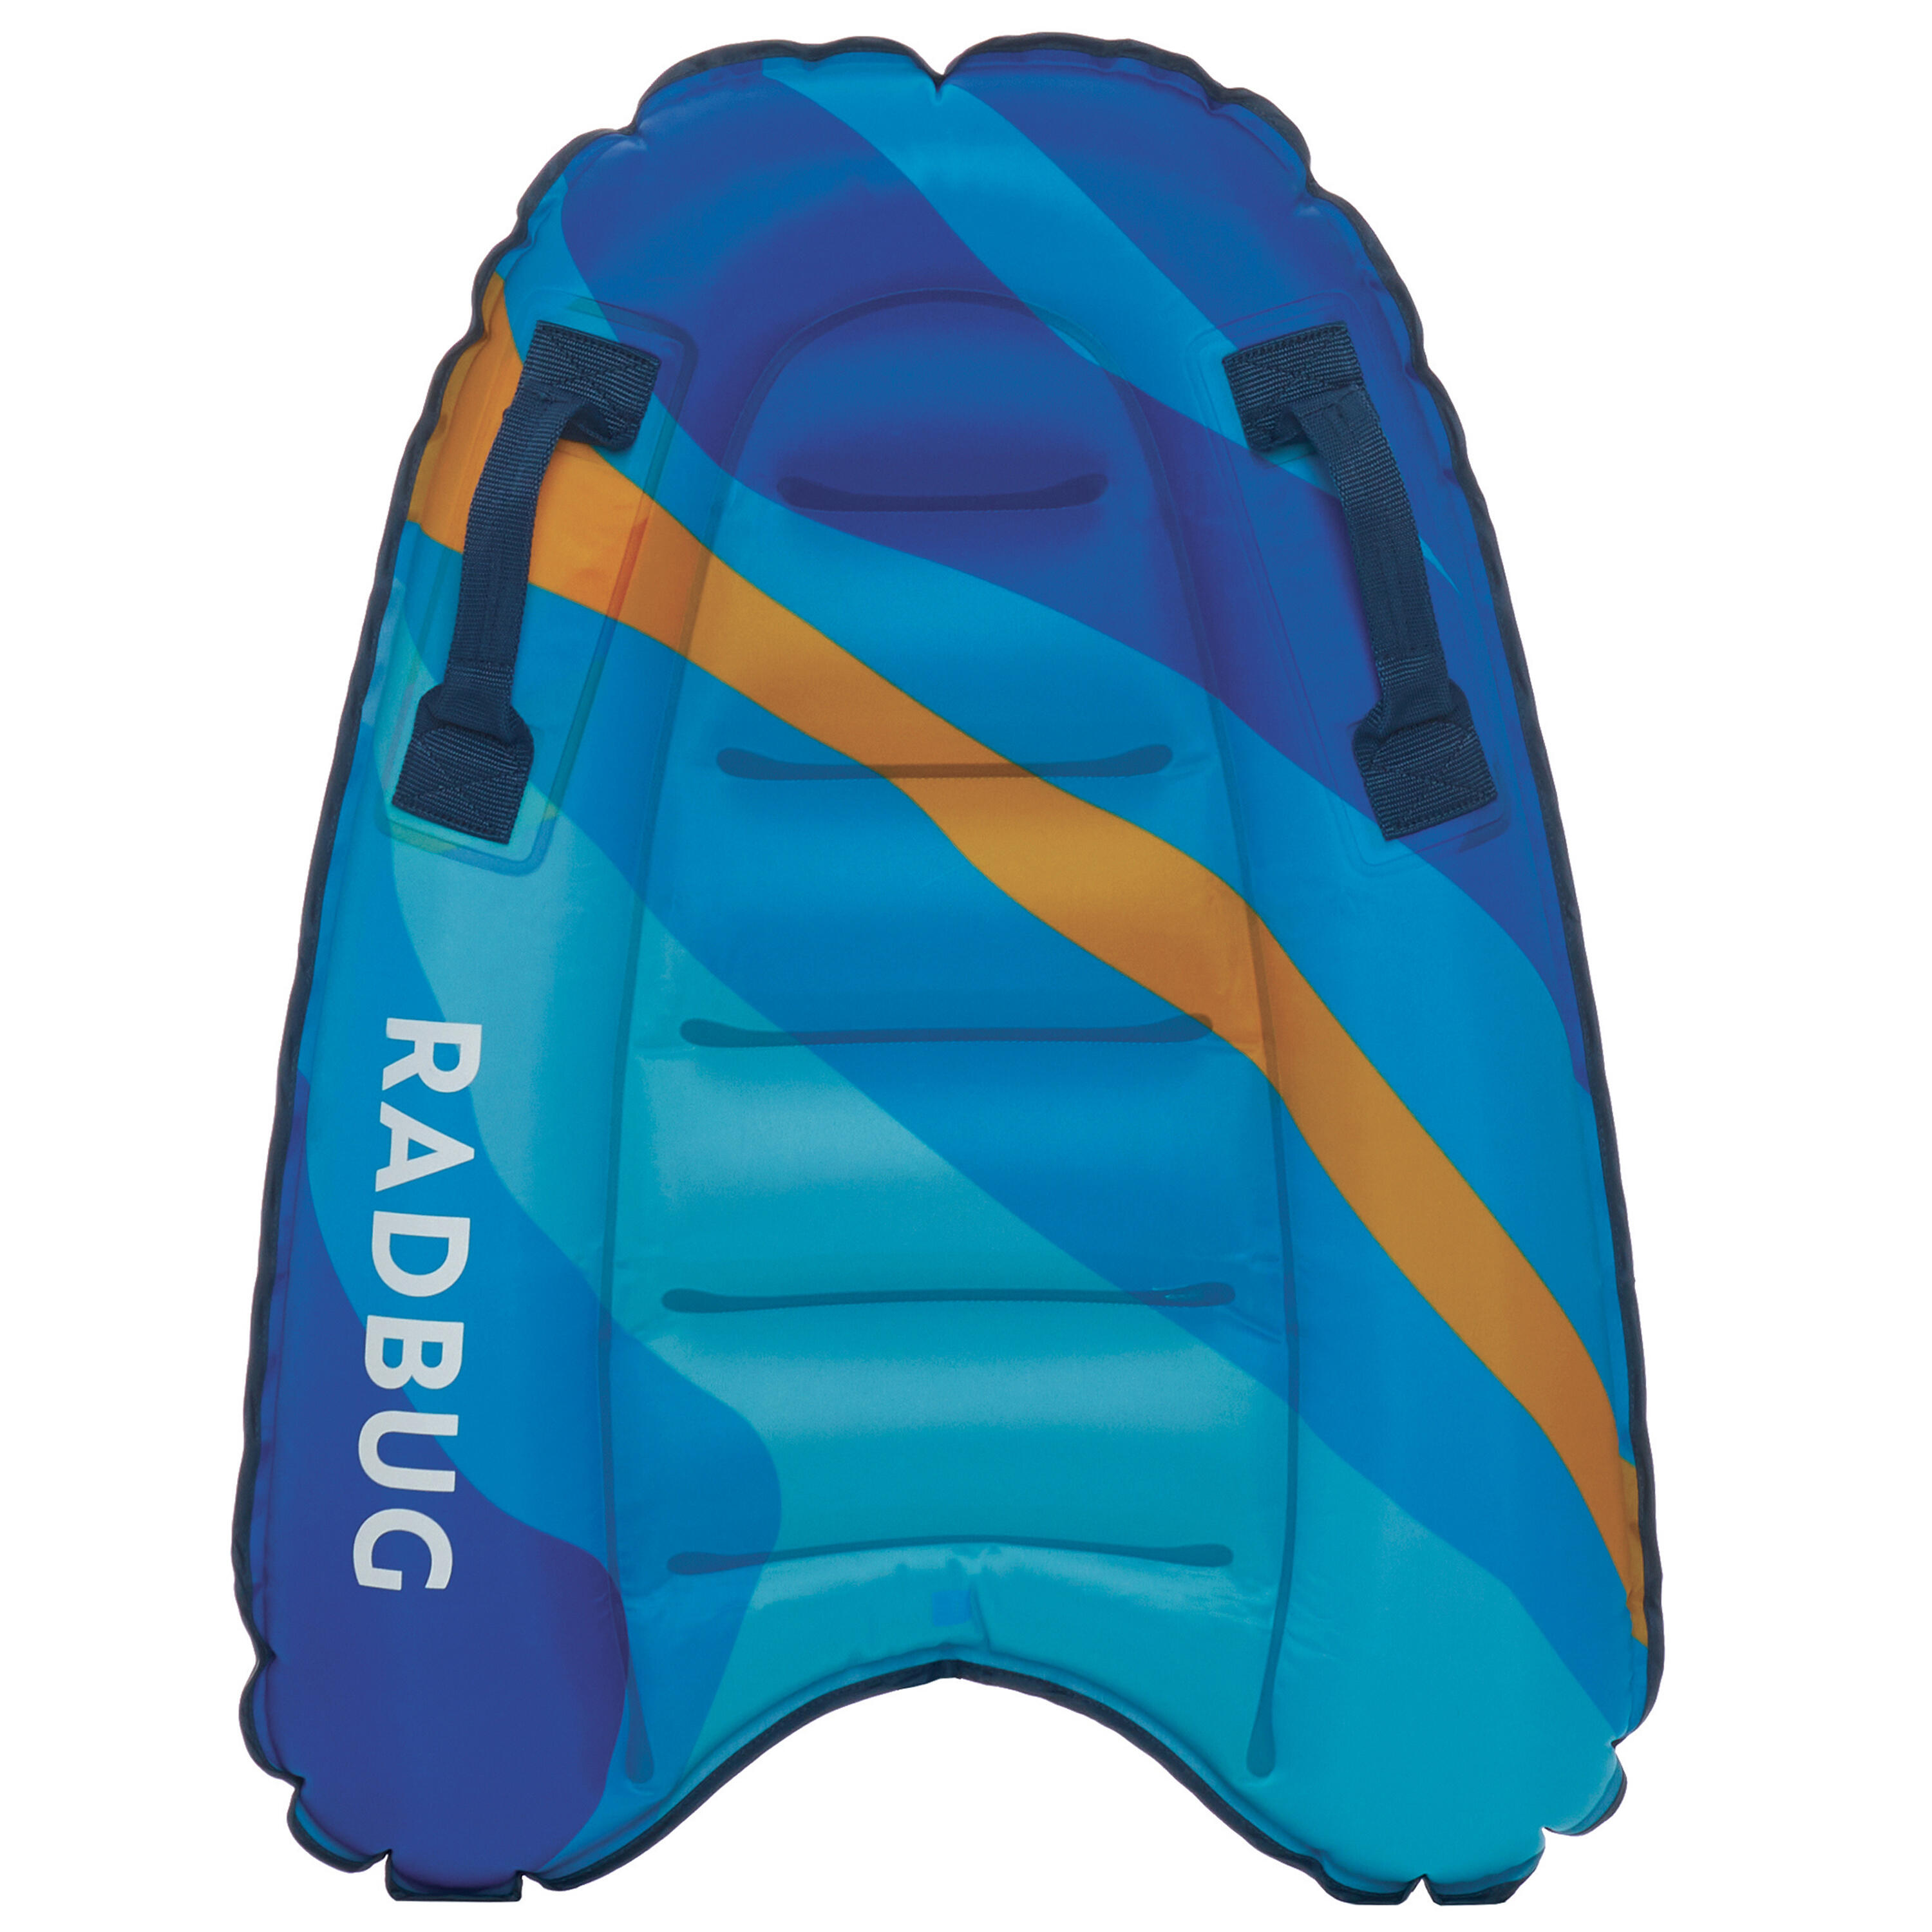 Bodyboard gonflabilă DISCOVERY Albastru-Galben Copii 4-8 ani (15-25 kg) decathlon.ro  Bodyboard si e-foil